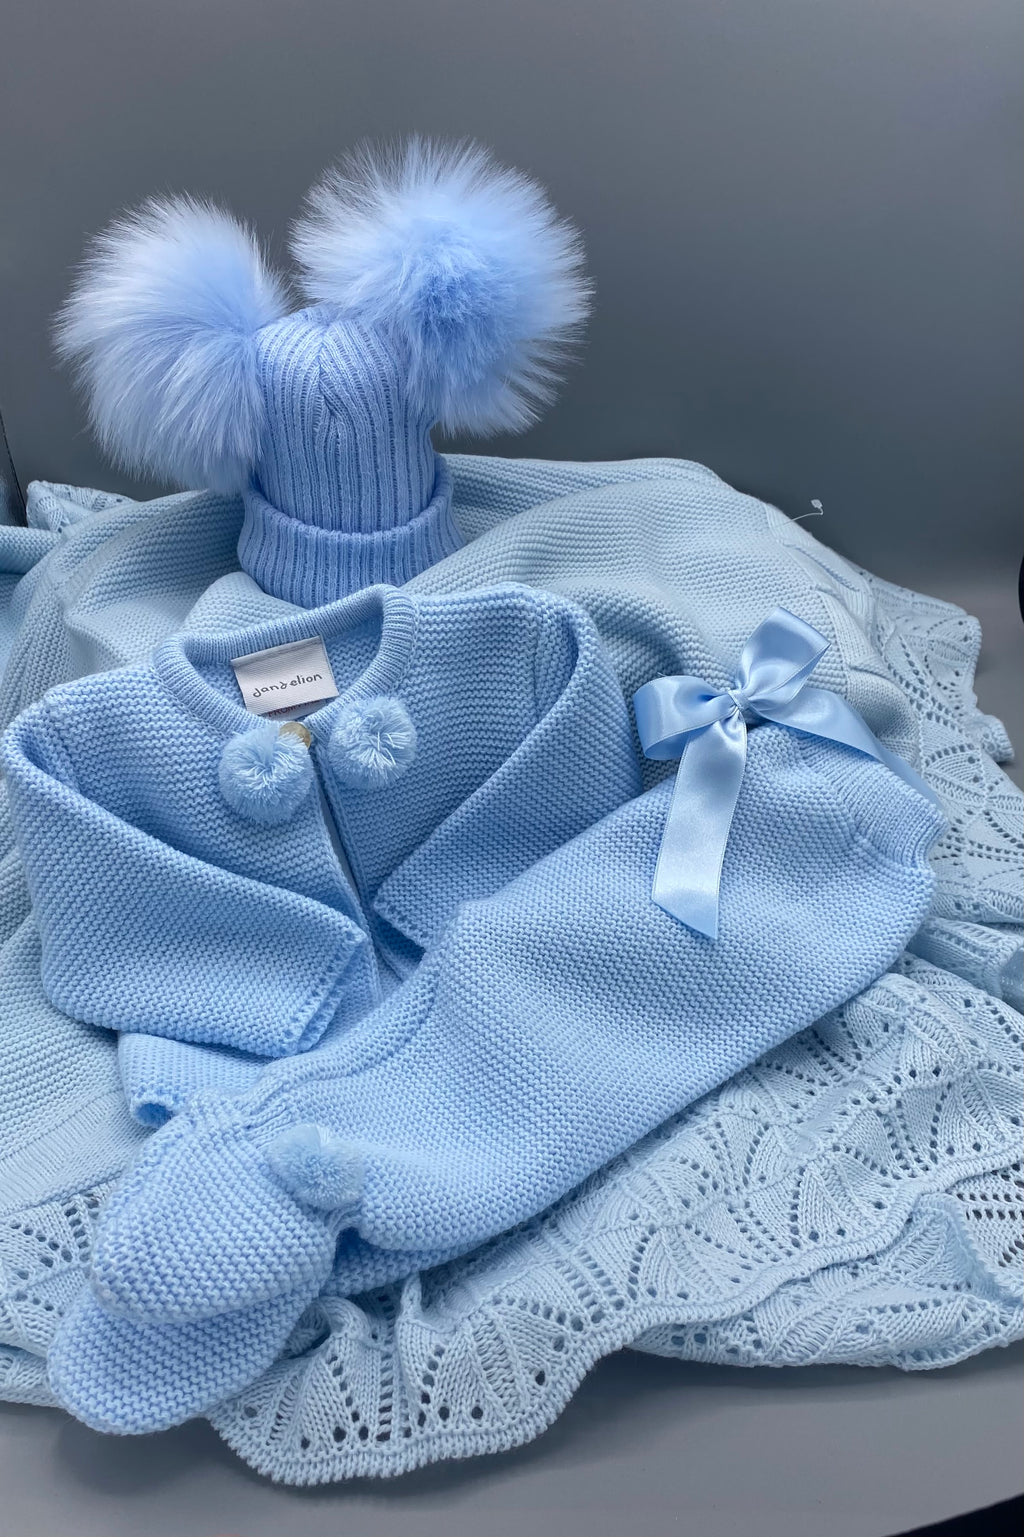 Blue newborn gift set